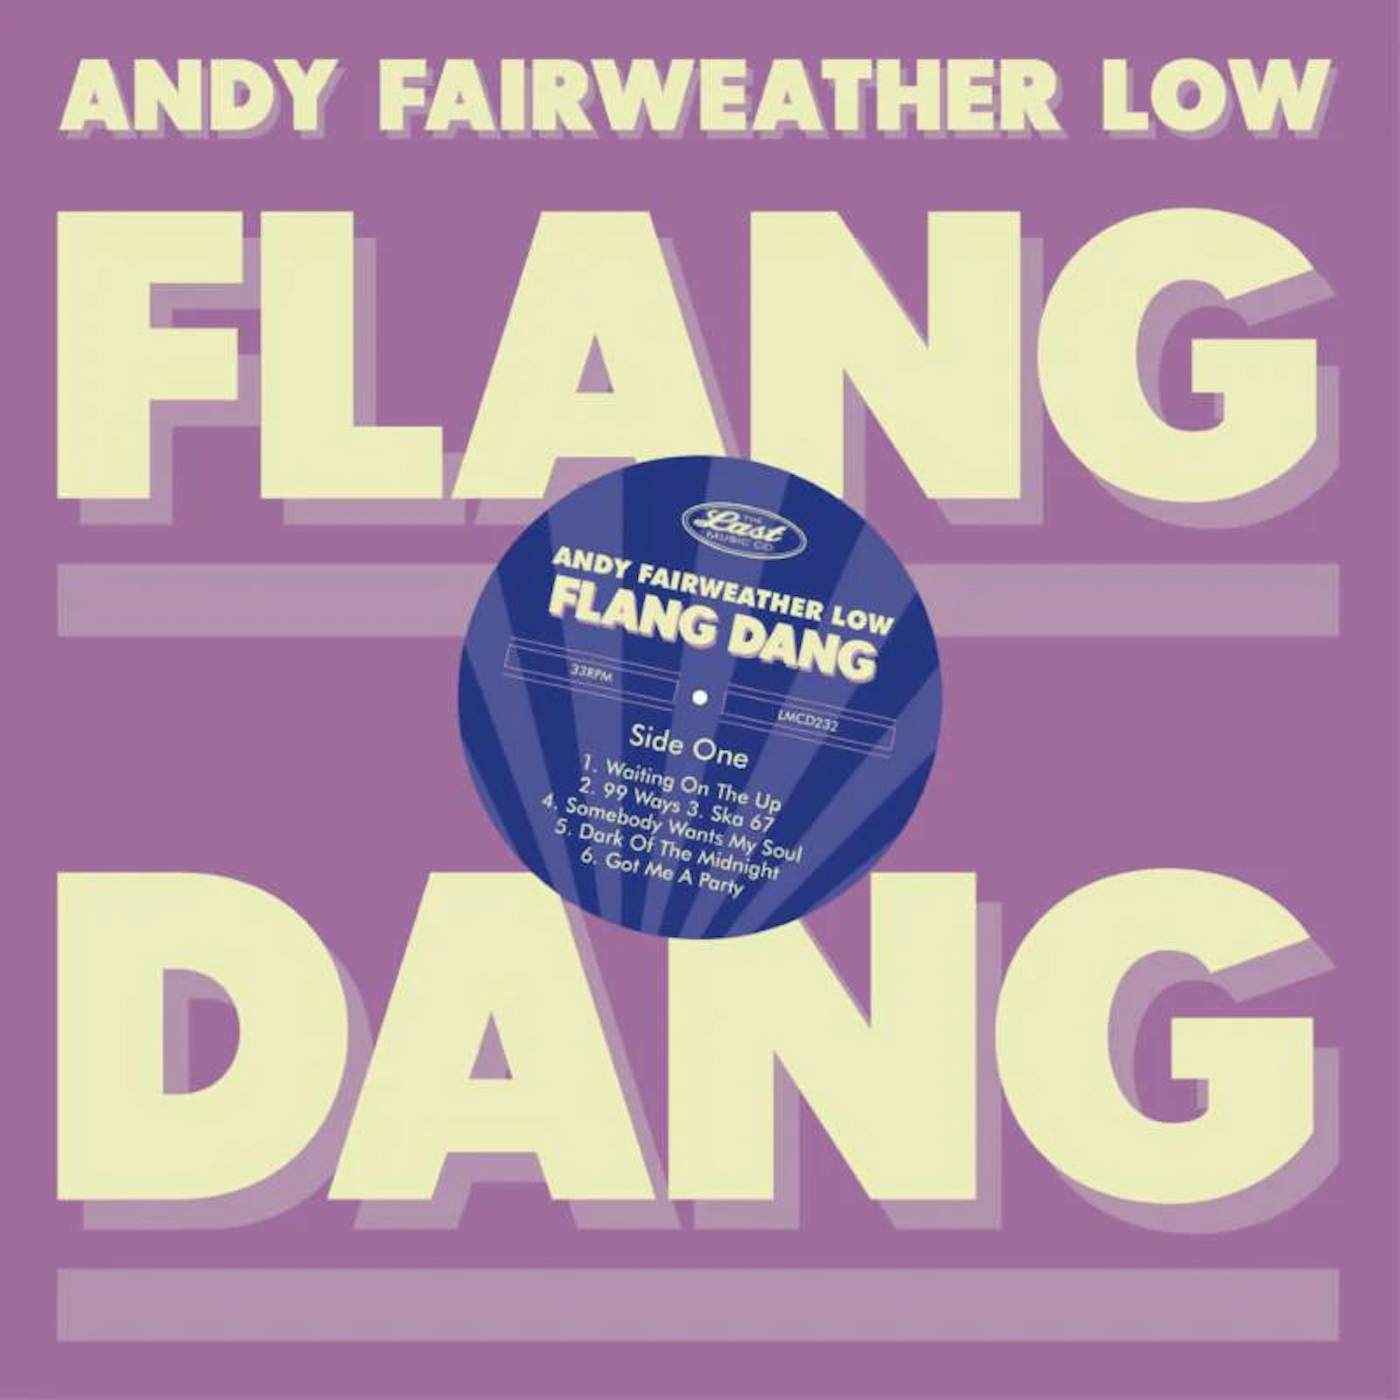 Andy Fairweather Low LP - Flang Dang (Vinyl)